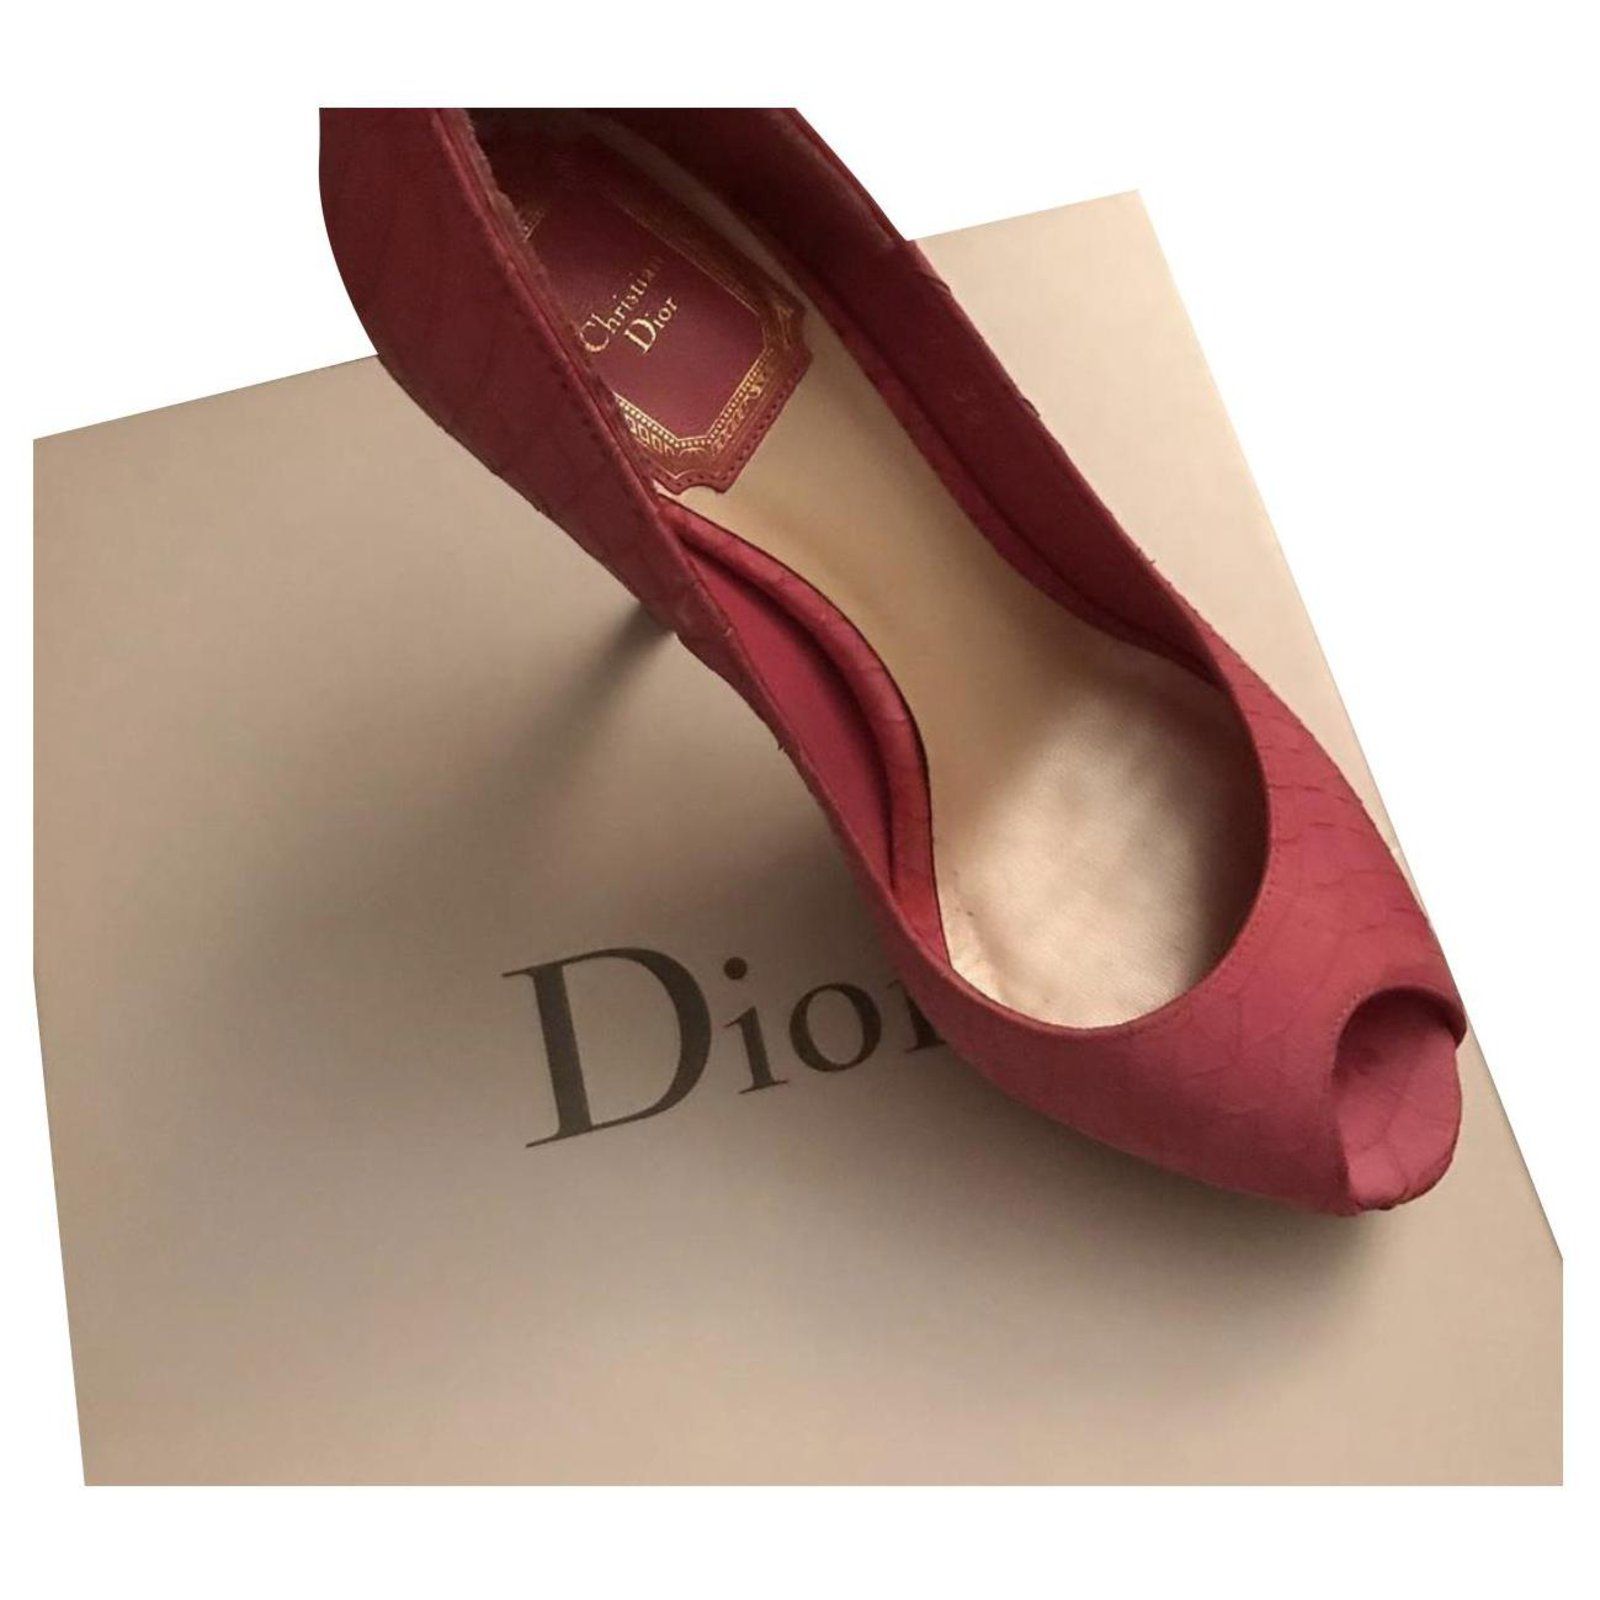 christian dior heels